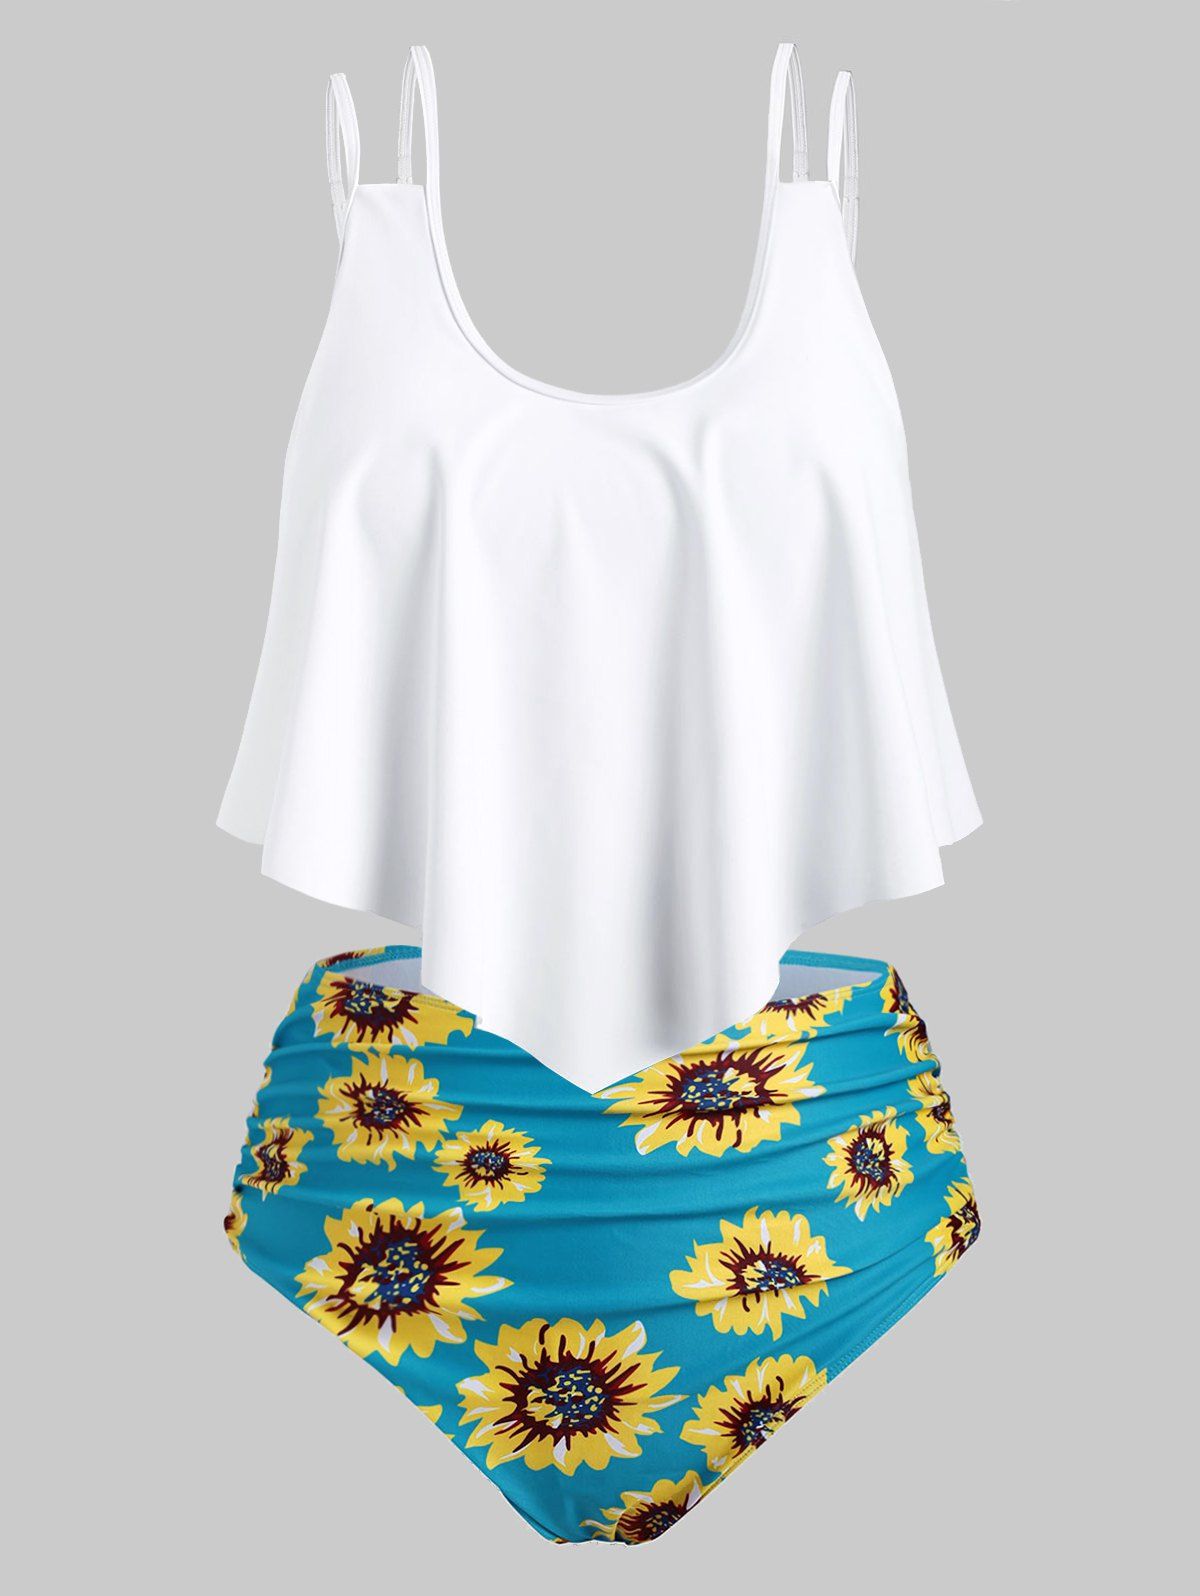 Plus Size Floral Ruffle Hem Contrast Colorblock Tankini Swimwear/Swimsuit/Bathing Suit - multicolor 3X